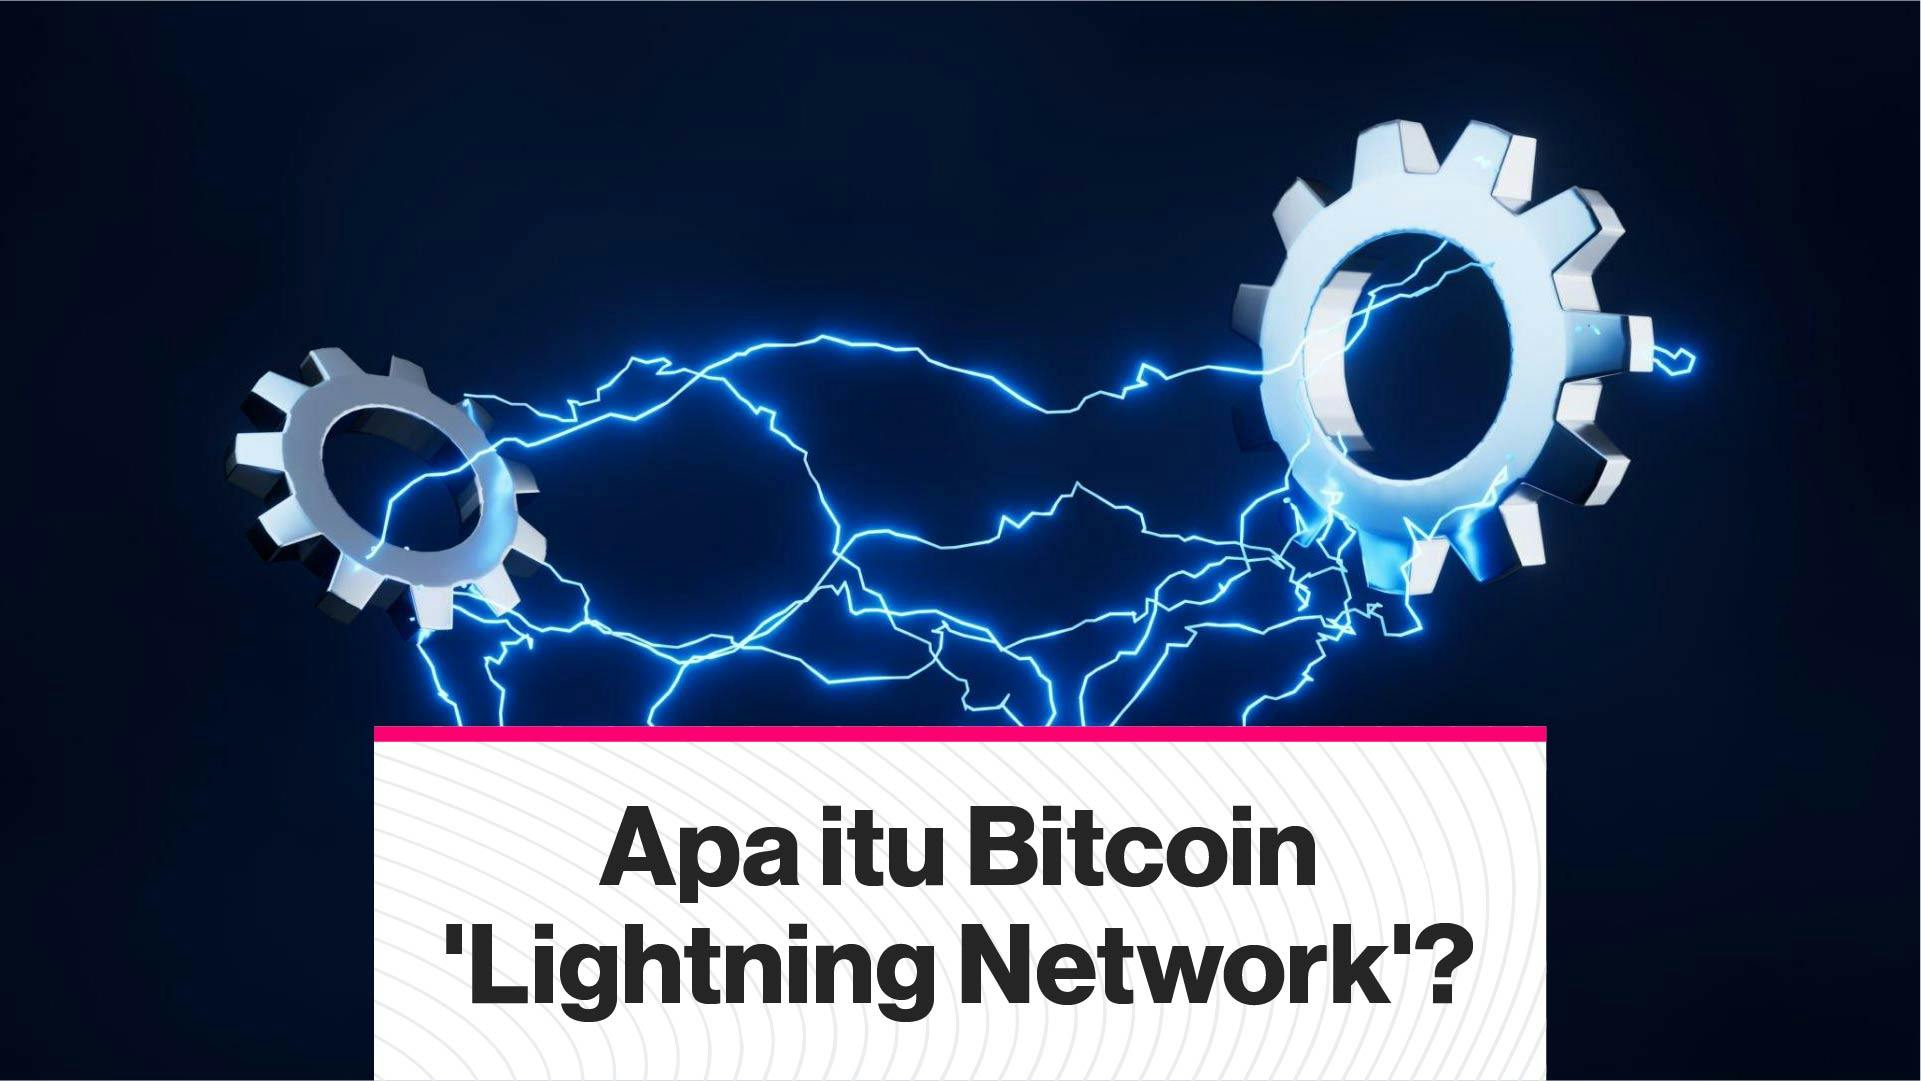 Apa itu Bitcoin Lightning Network? (Coindesk Indonesia)